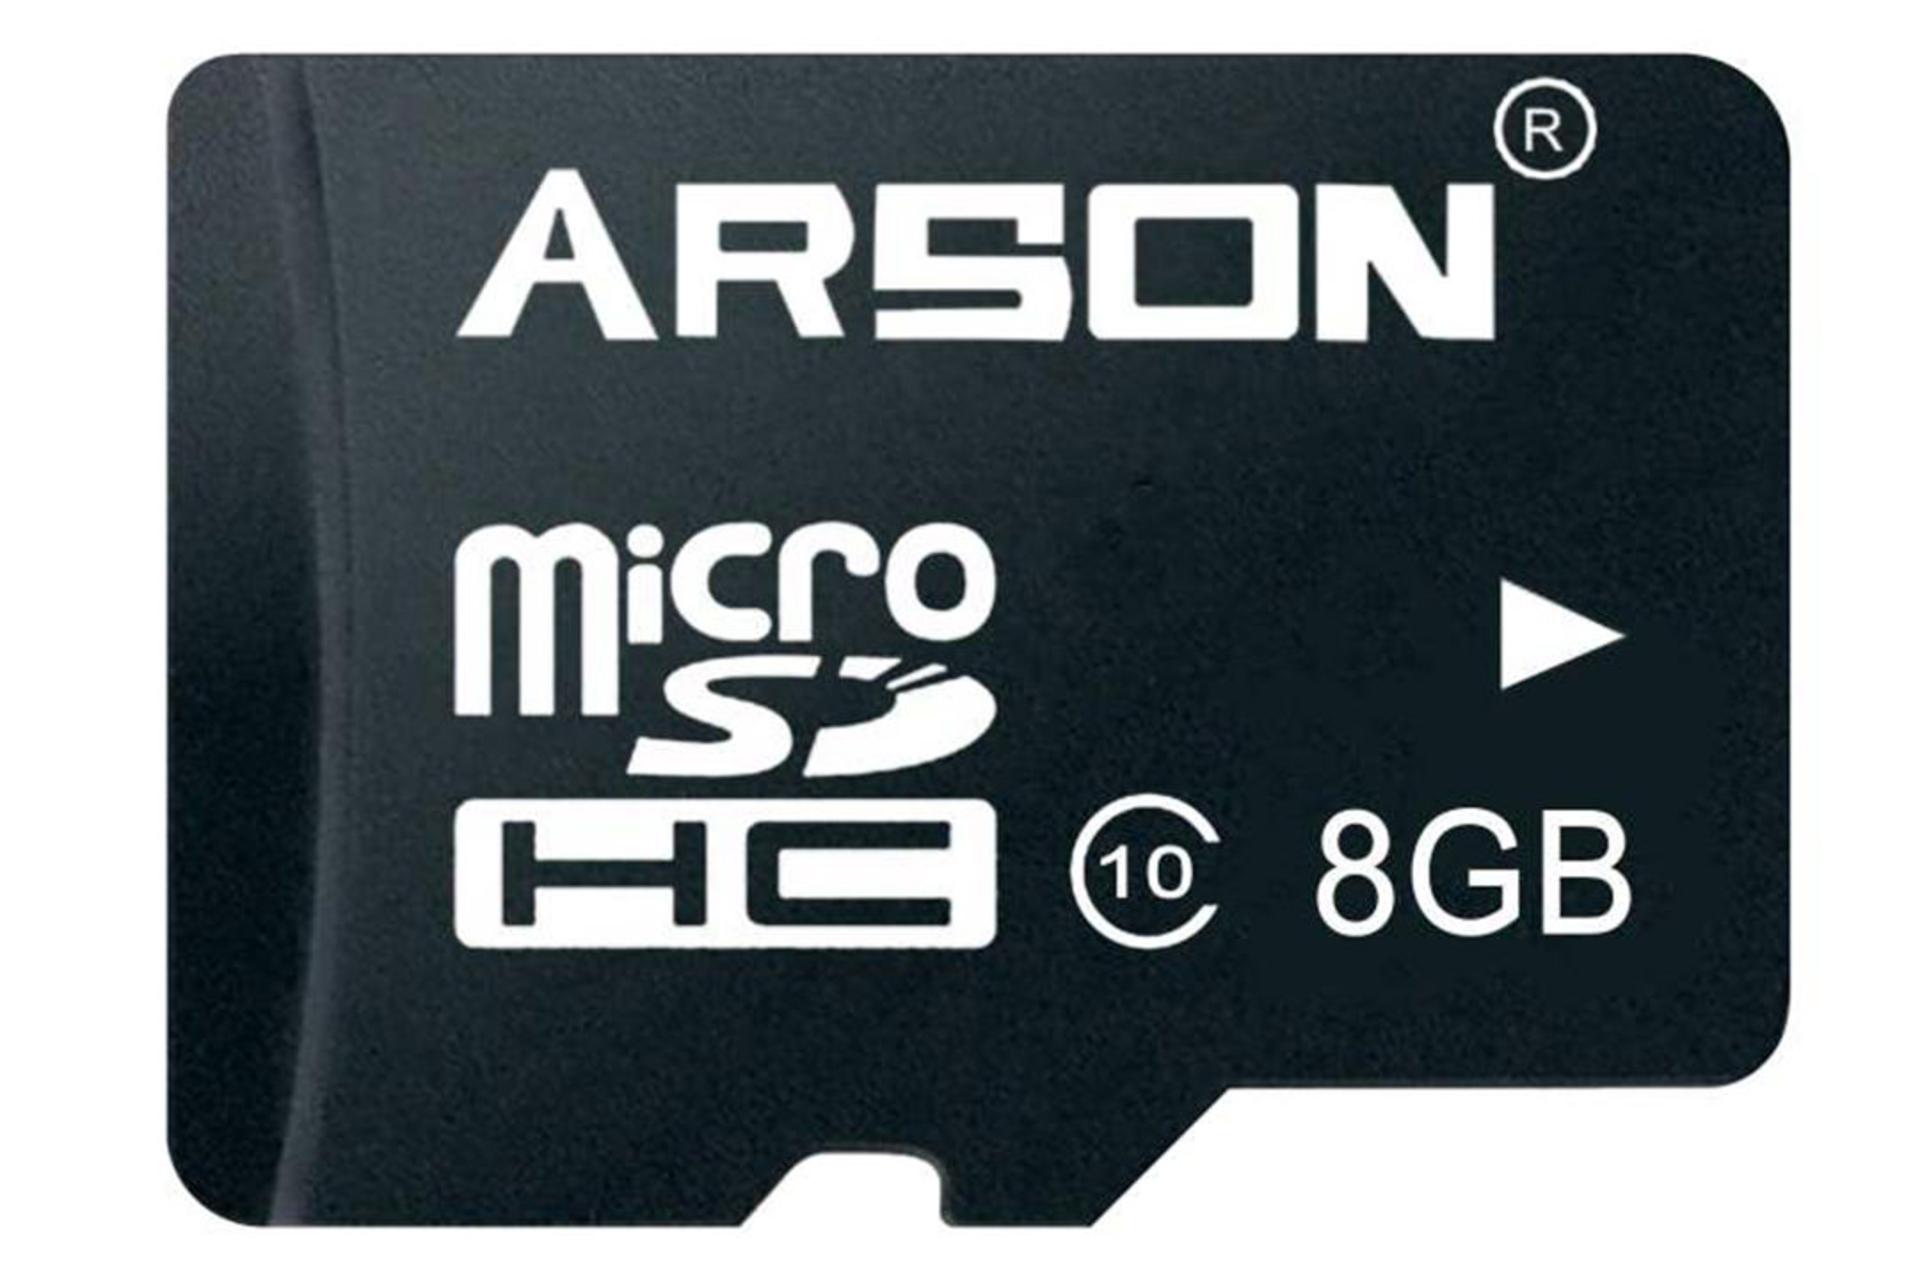 Arson AM-2108 microSDHC Class 10 8GB